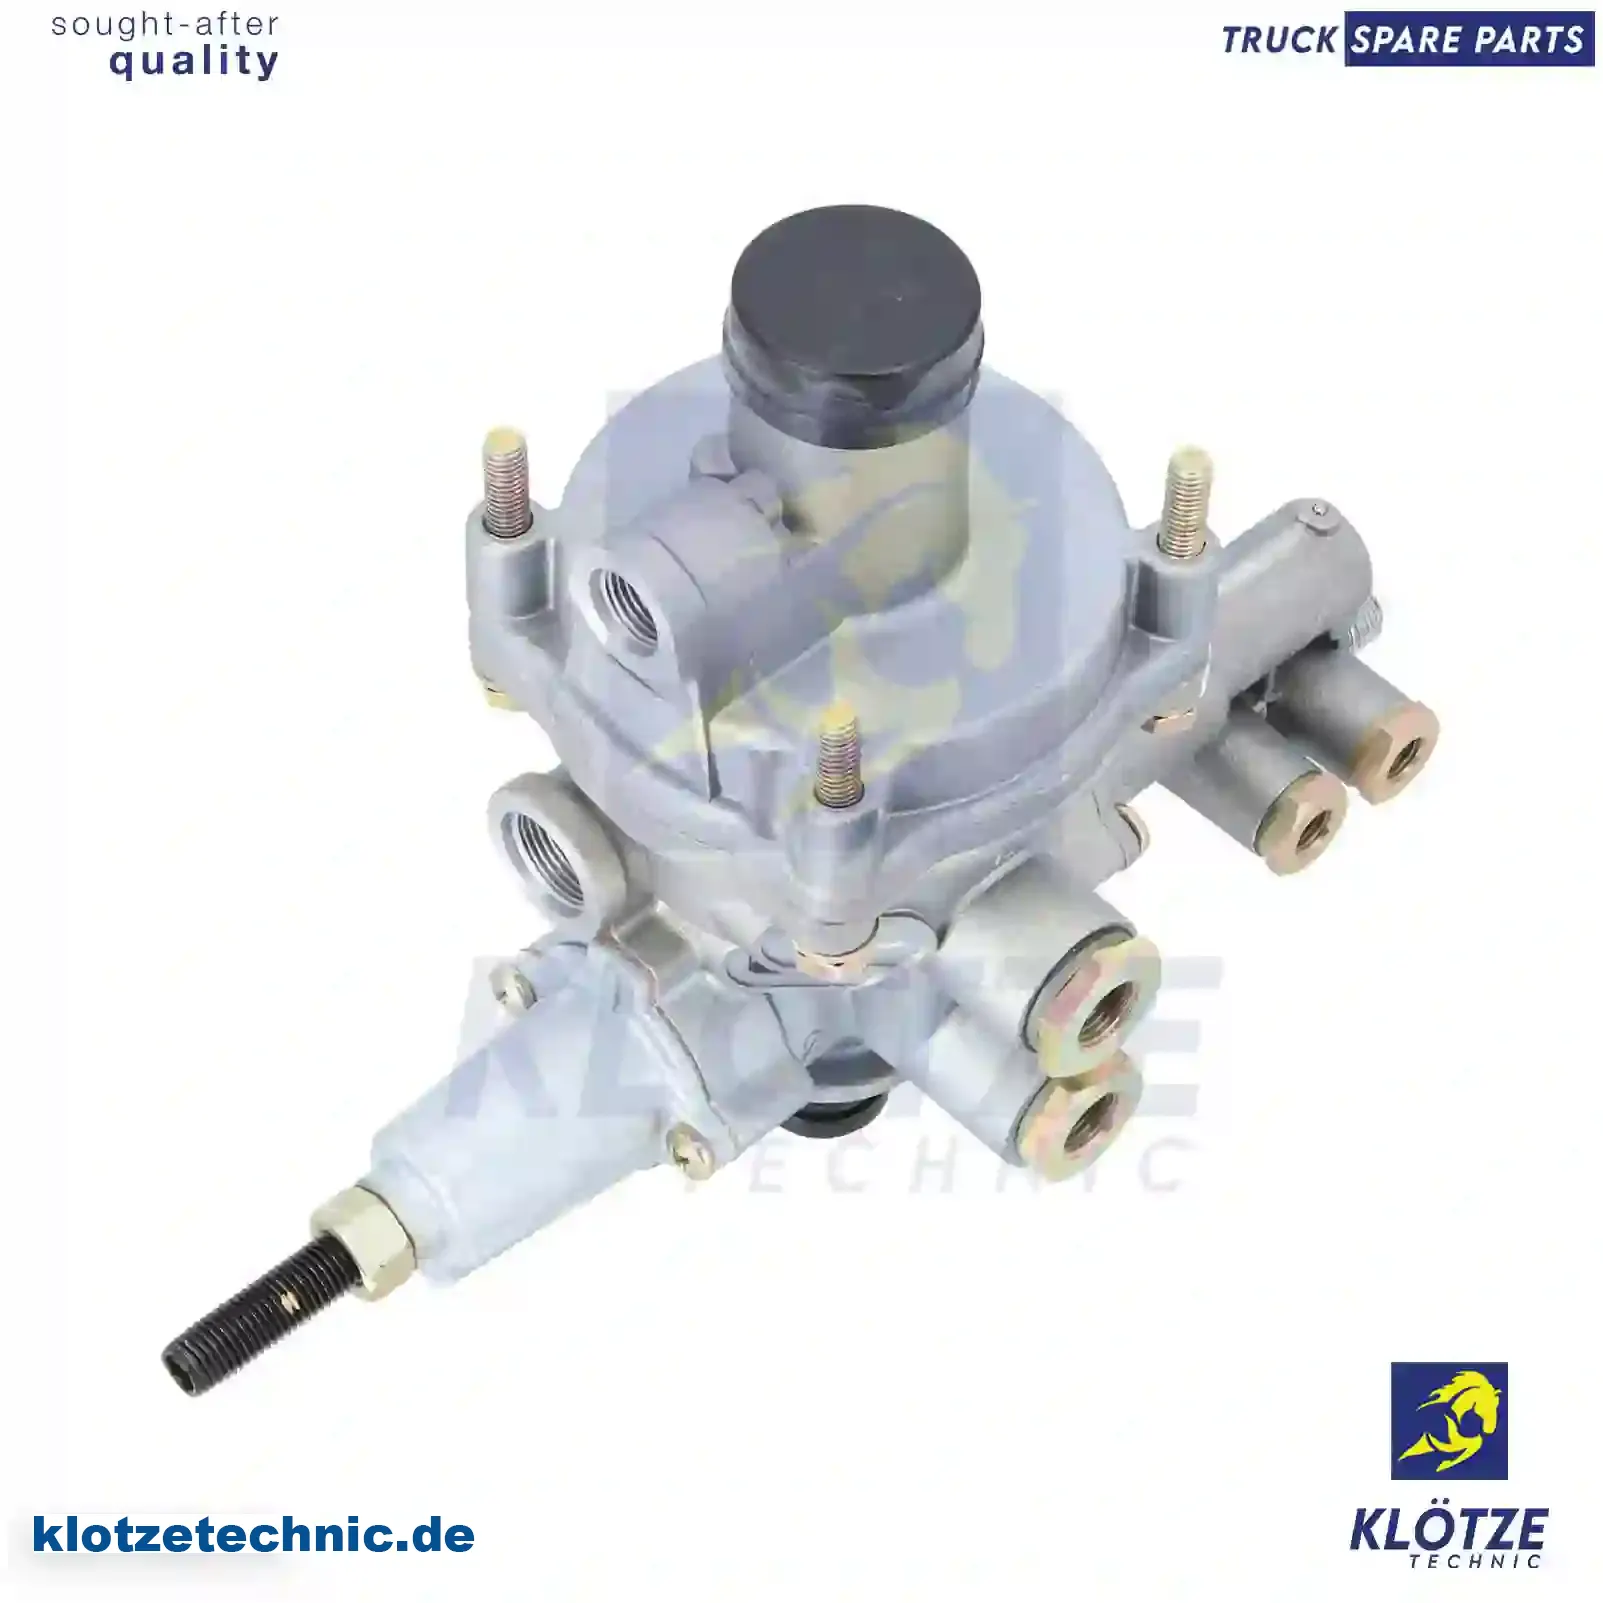 Load sensitive valve, 1628954, , , || Klötze Technic